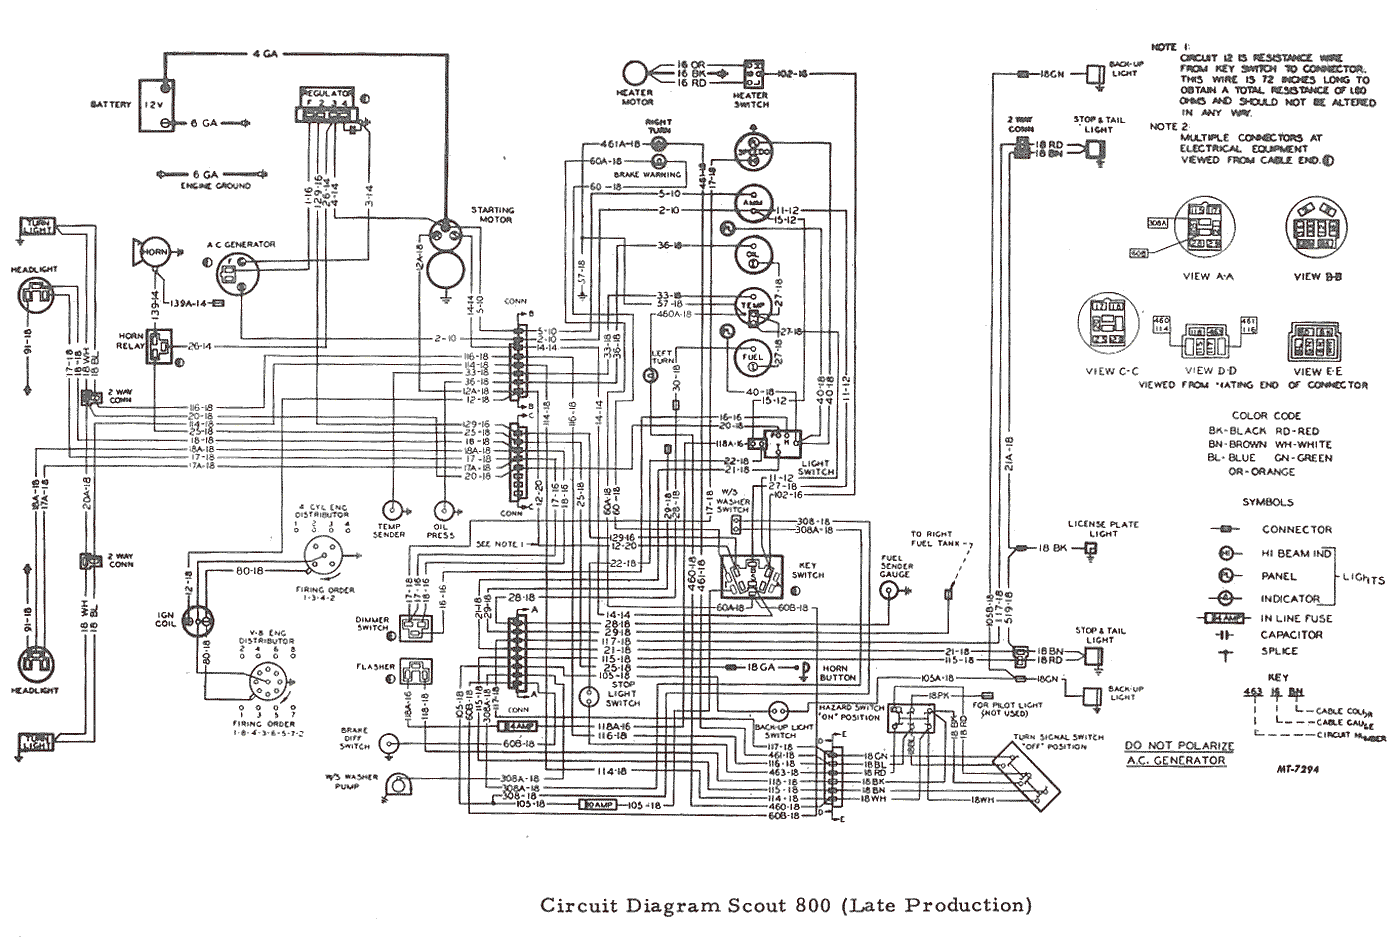 1977 International Scout Ii Wiring Diagram | New Wiring Resources 2019